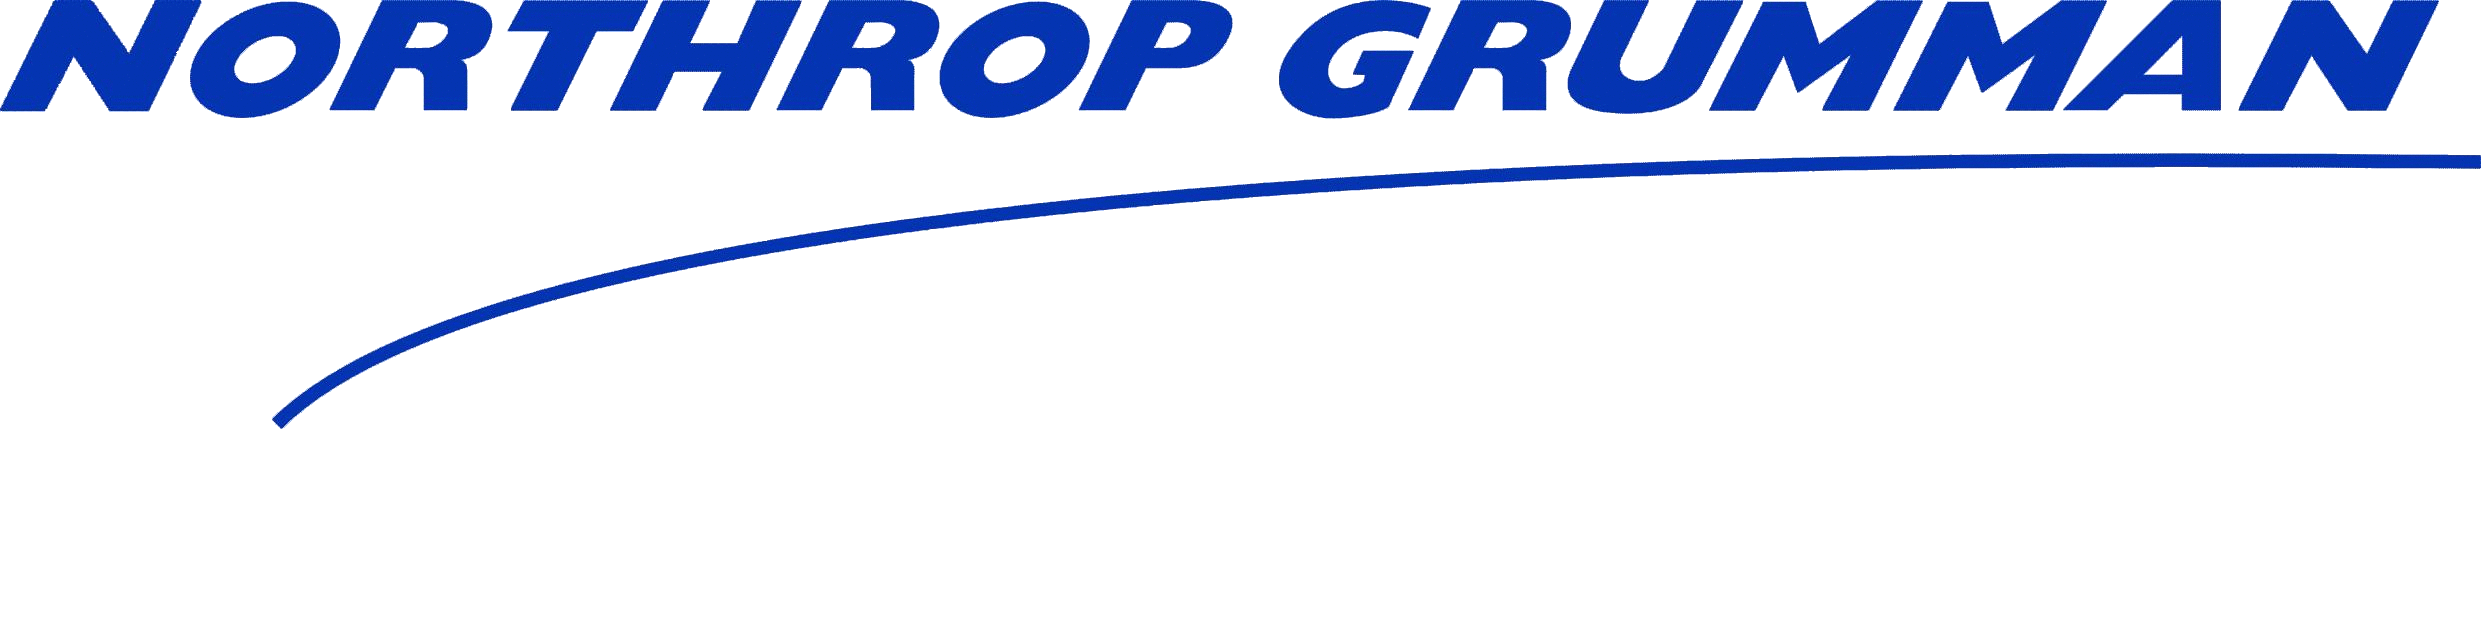 Northrop Grumman Logo Transparent Background Image Pictures Becuo